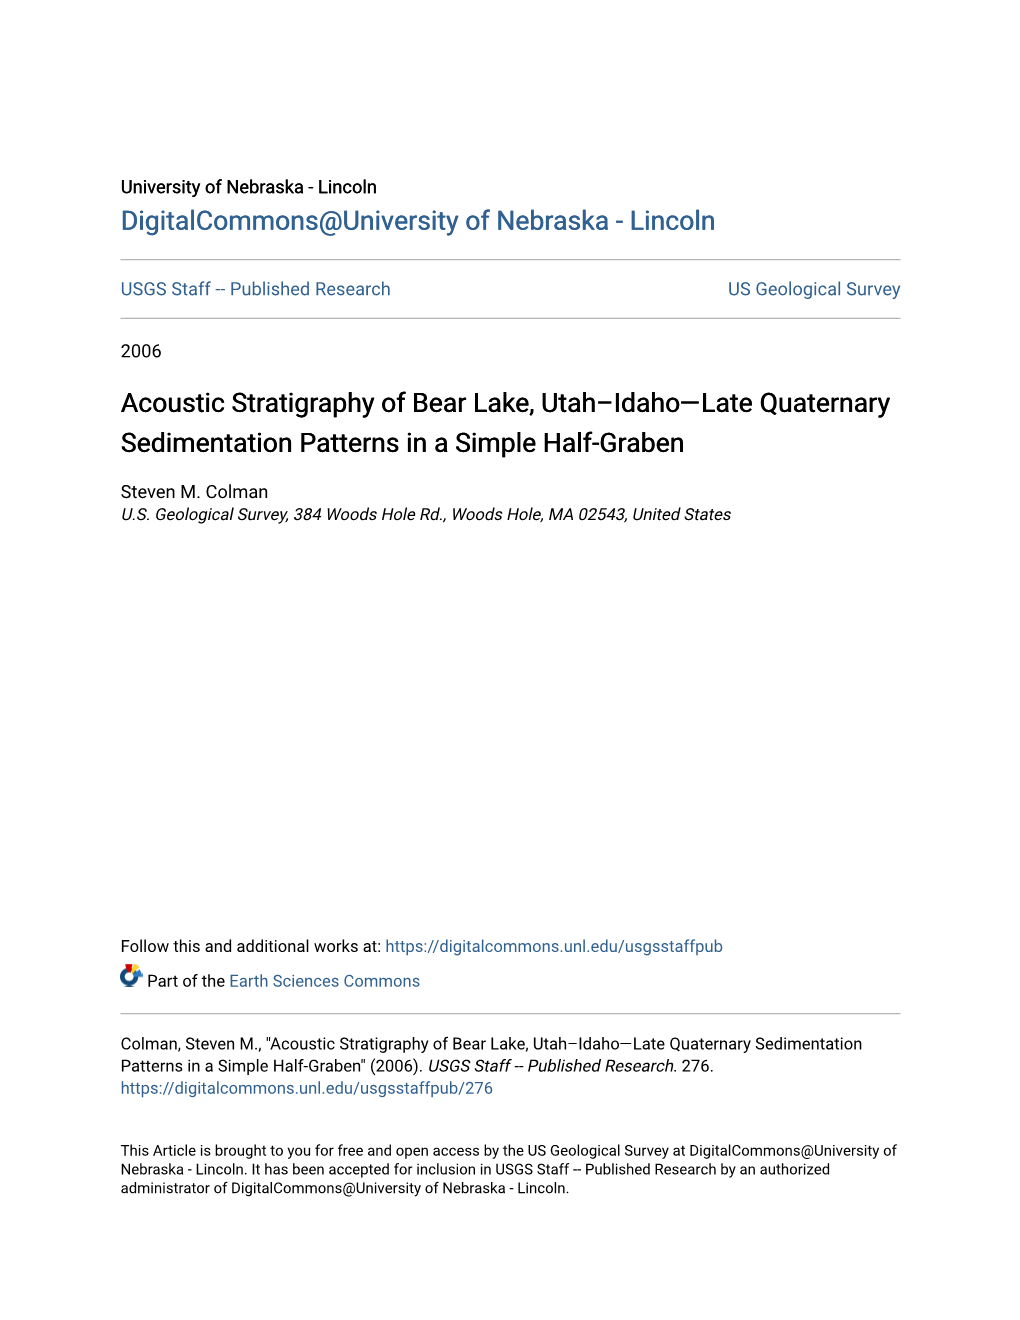 Acoustic Stratigraphy of Bear Lake, Utah–Idaho—Late Quaternary Sedimentation Patterns in a Simple Half-Graben